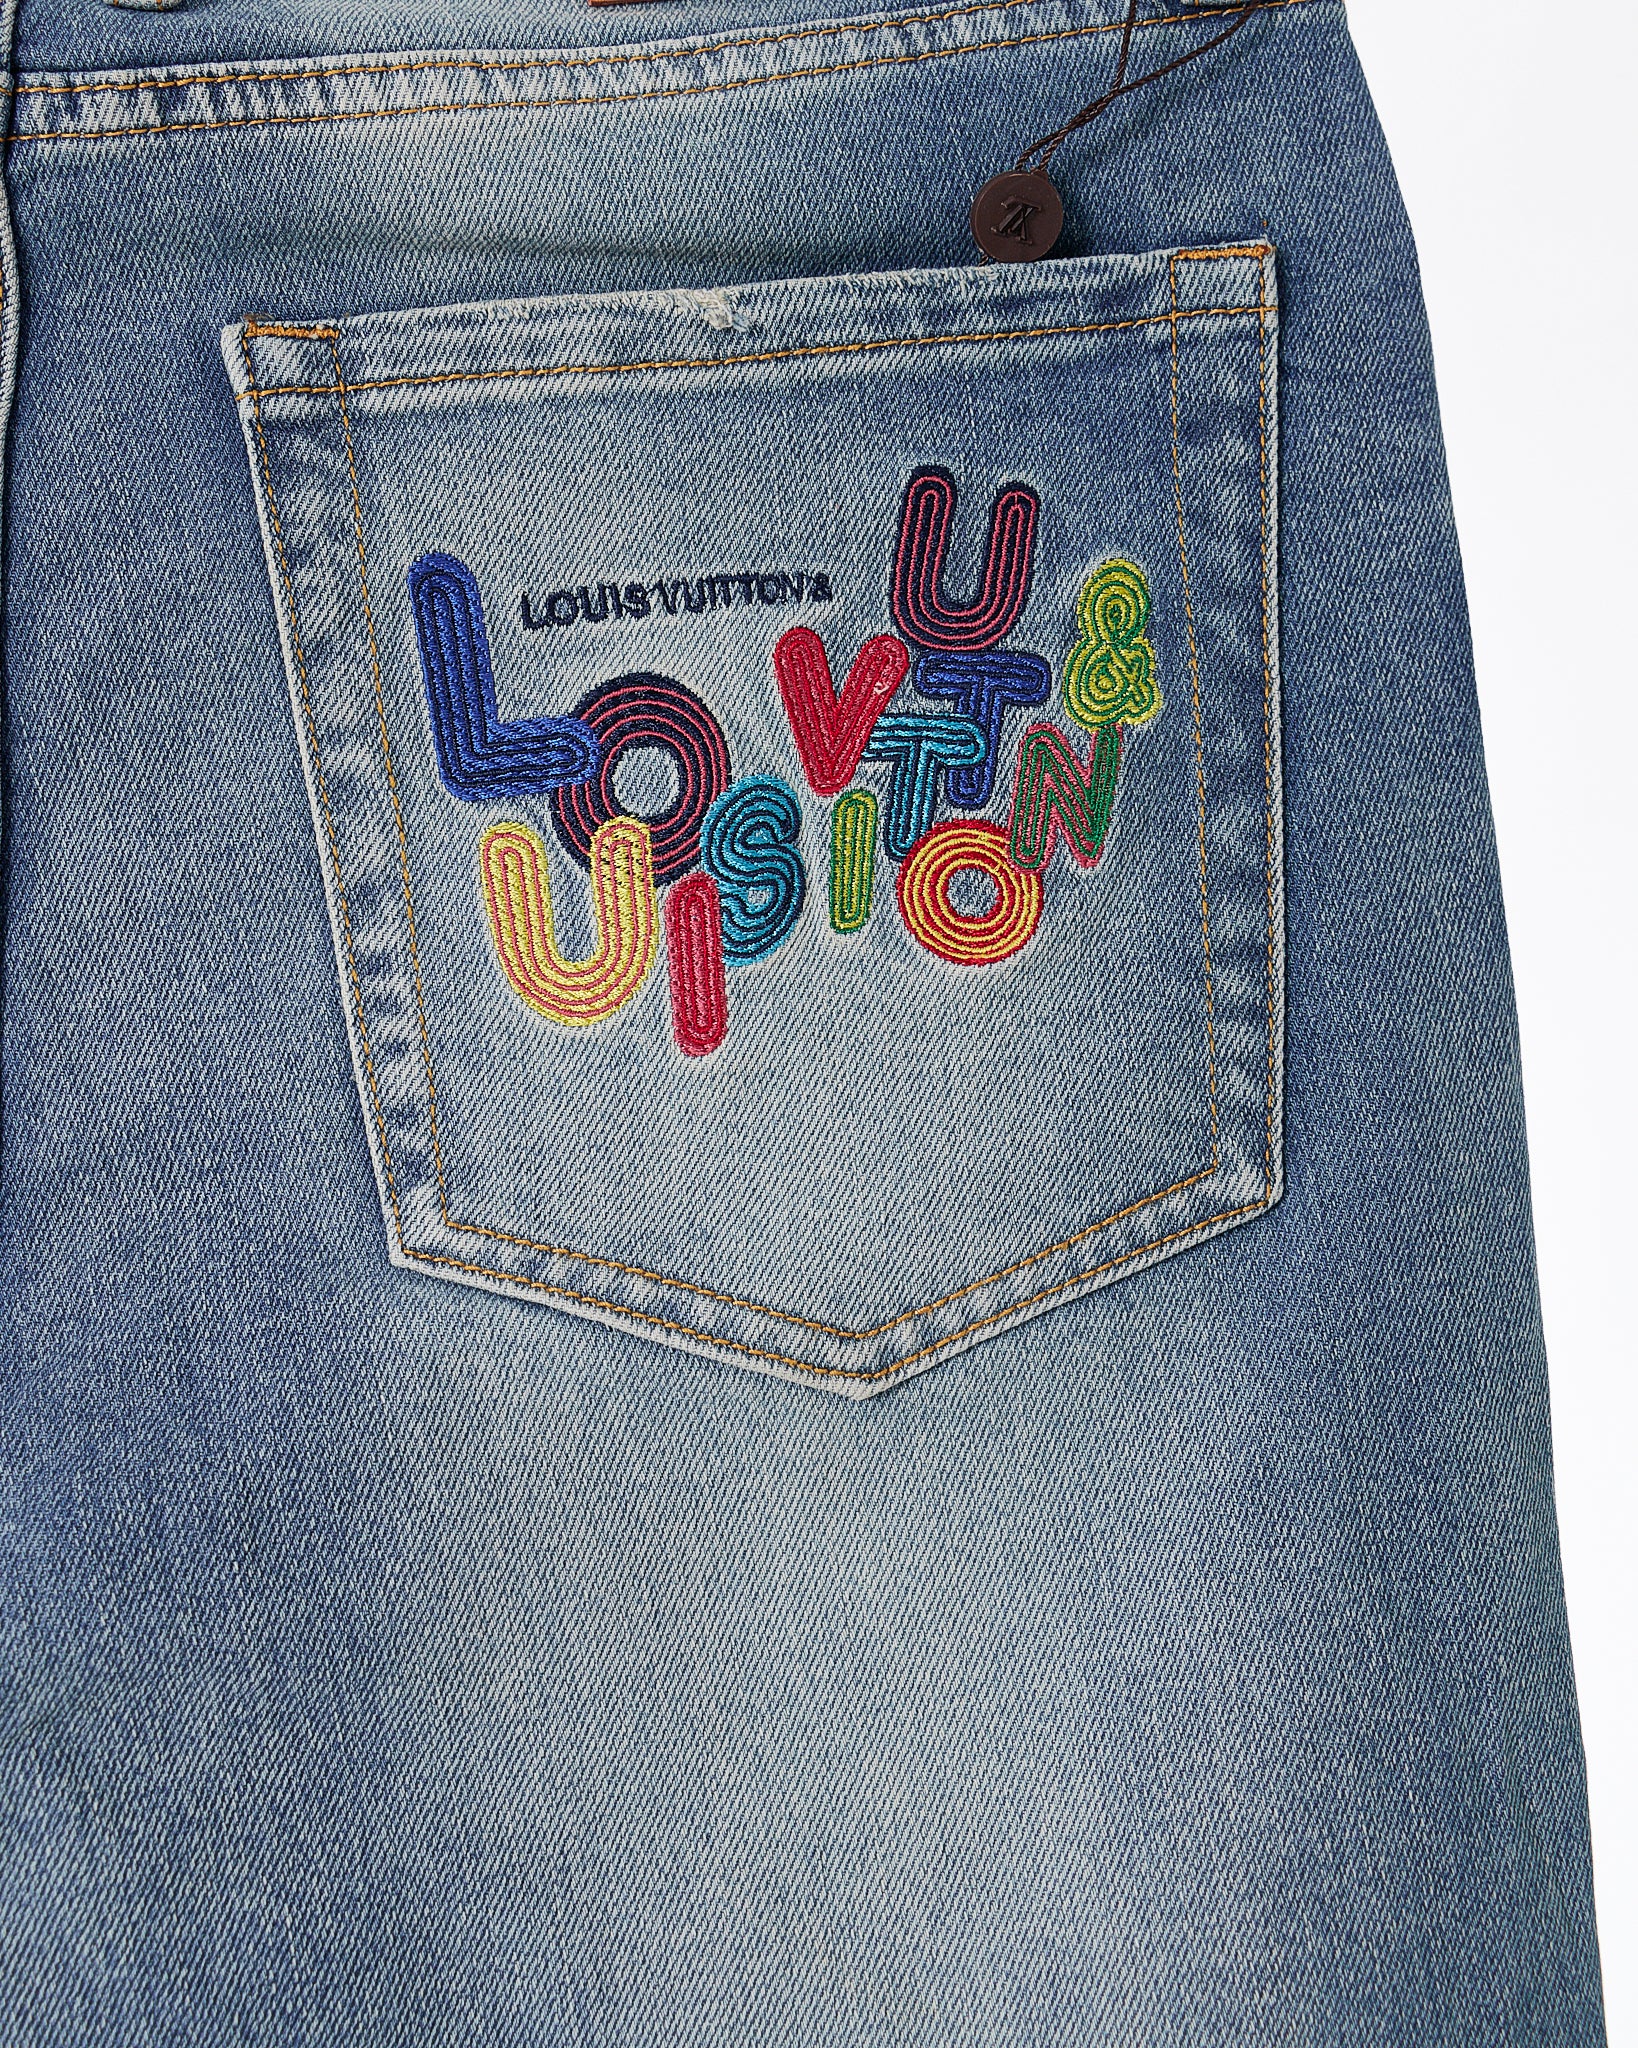 LV Colorful Logo Embroidered Men Blue Jeans 72.90